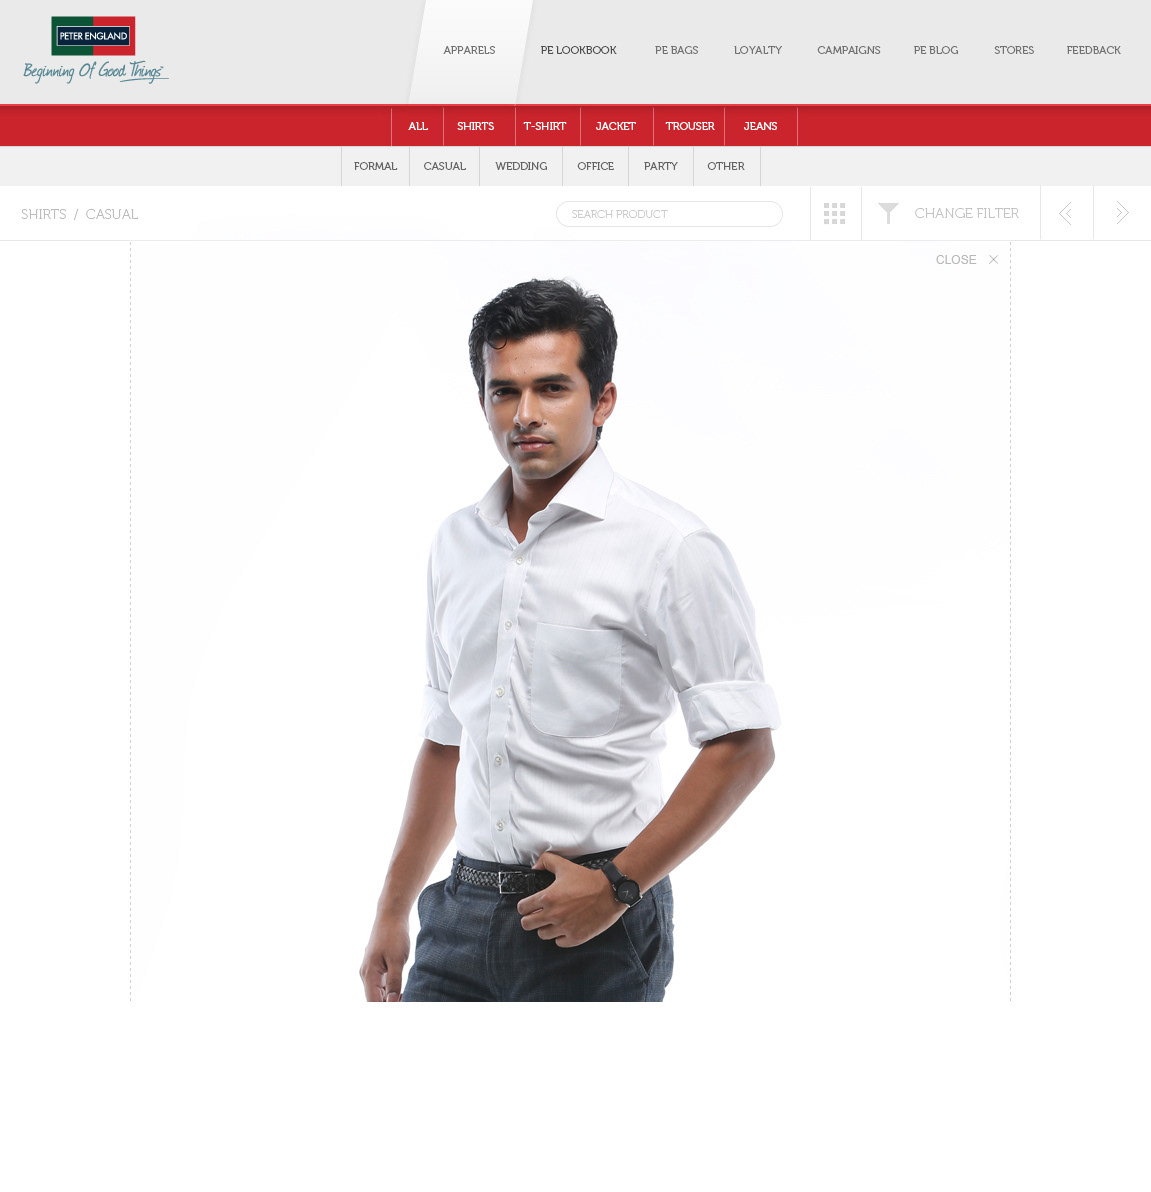 peter  england peterengland tomae India apparels fashion brand Website Web UI UI designing Peter england 